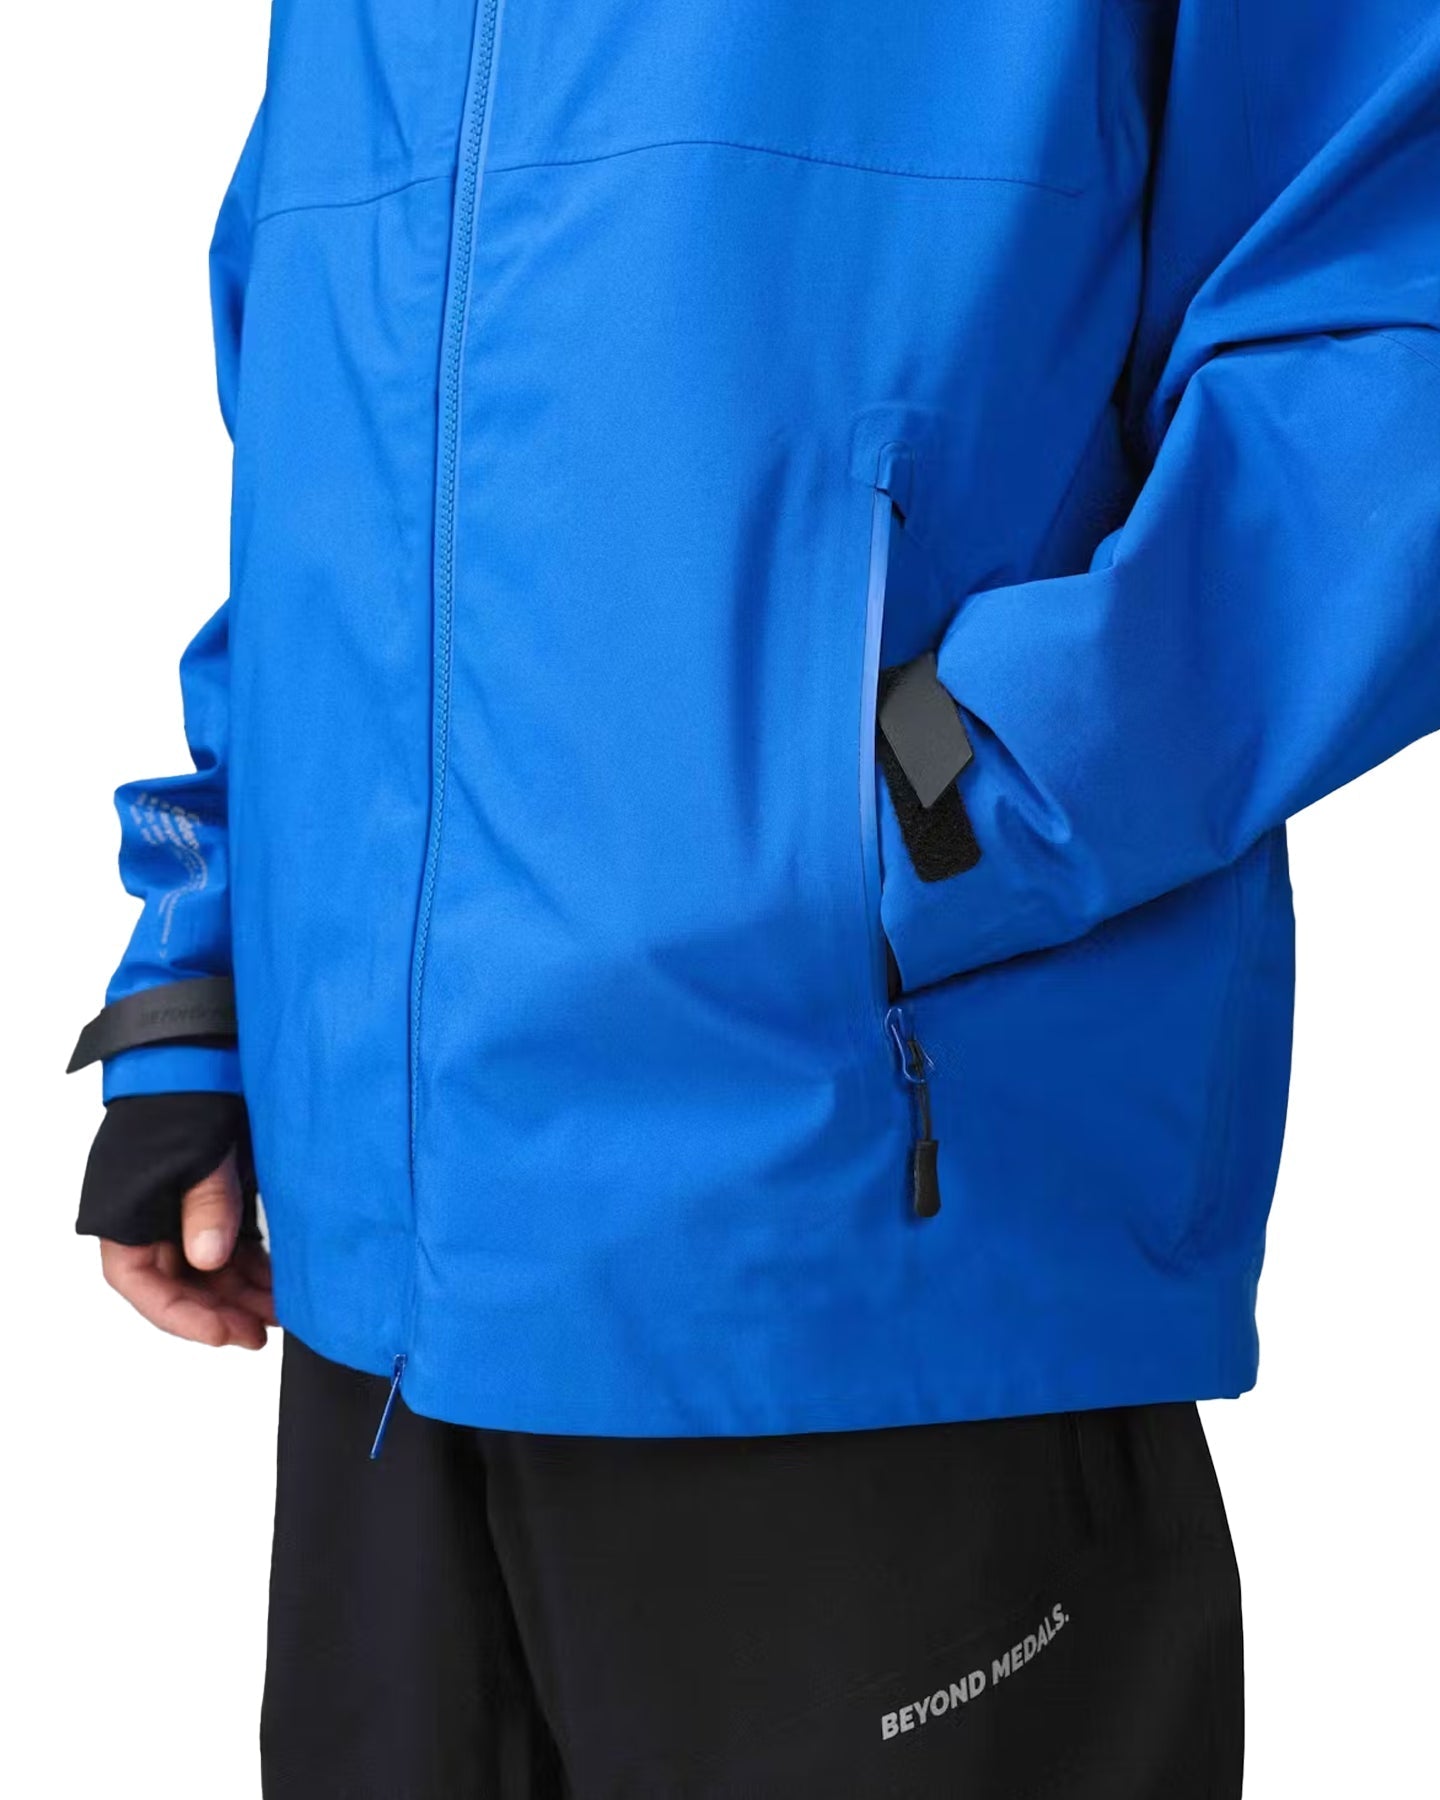 Beyond Medals High Tech 3L Snow Jacket - Blue Ocean Men's Snow Jackets - SnowSkiersWarehouse